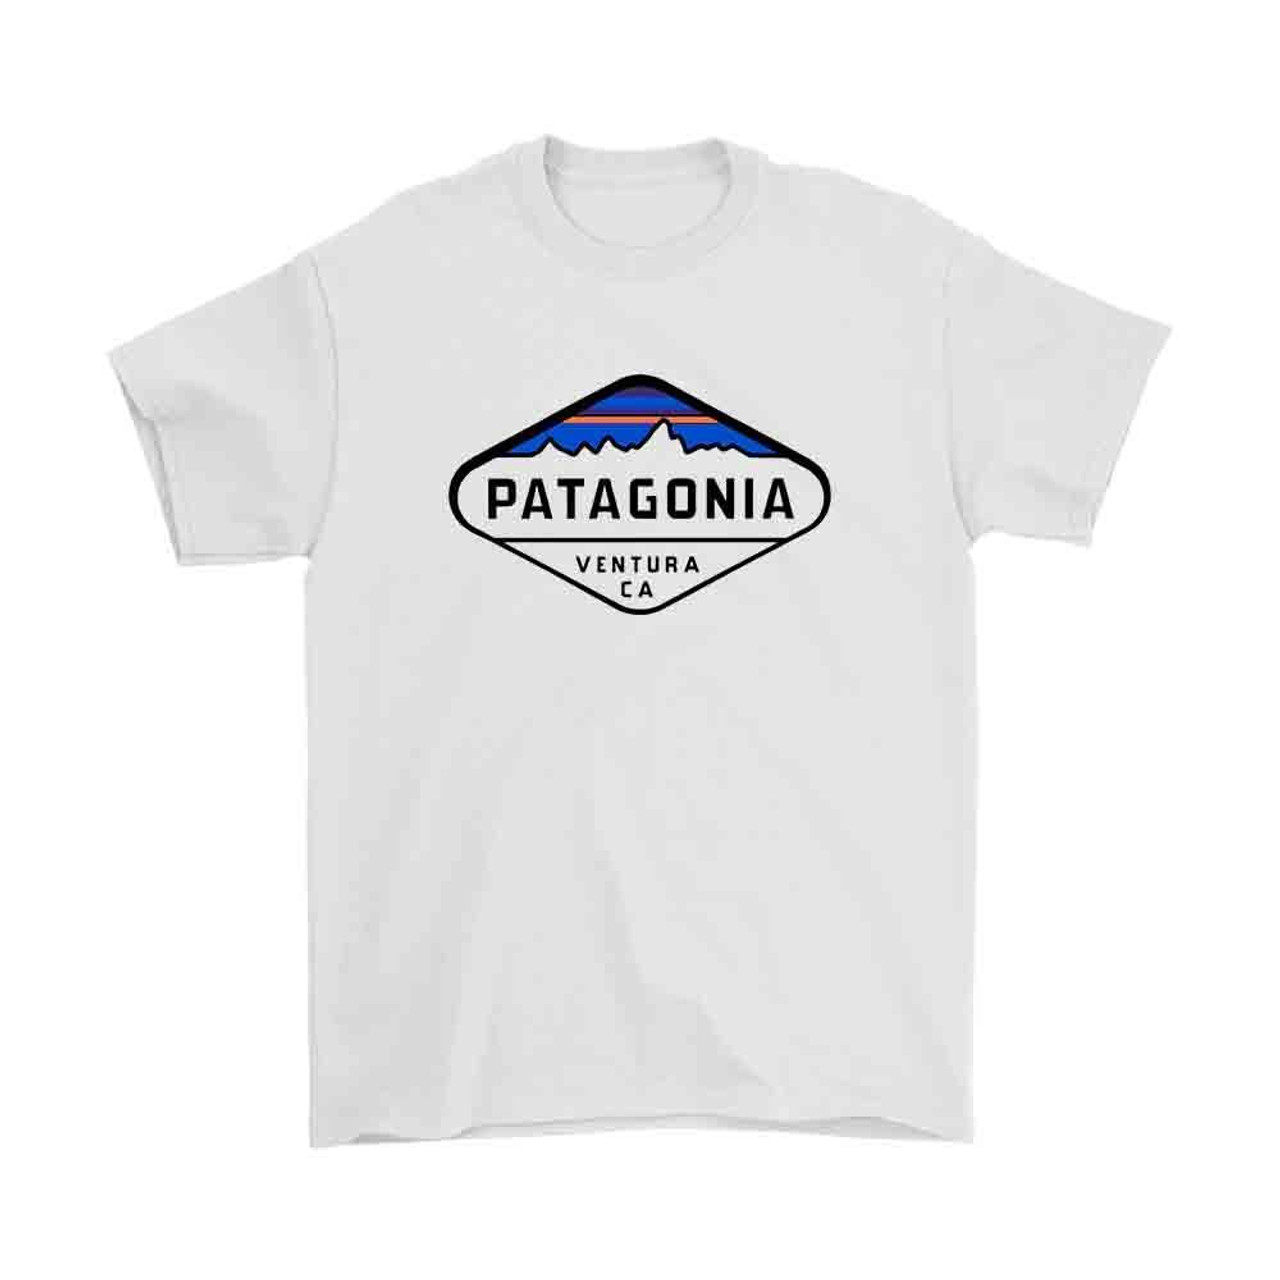 gnist mangel tidligere Patagonia Ventura Ca Logo Man's T-Shirt Tee